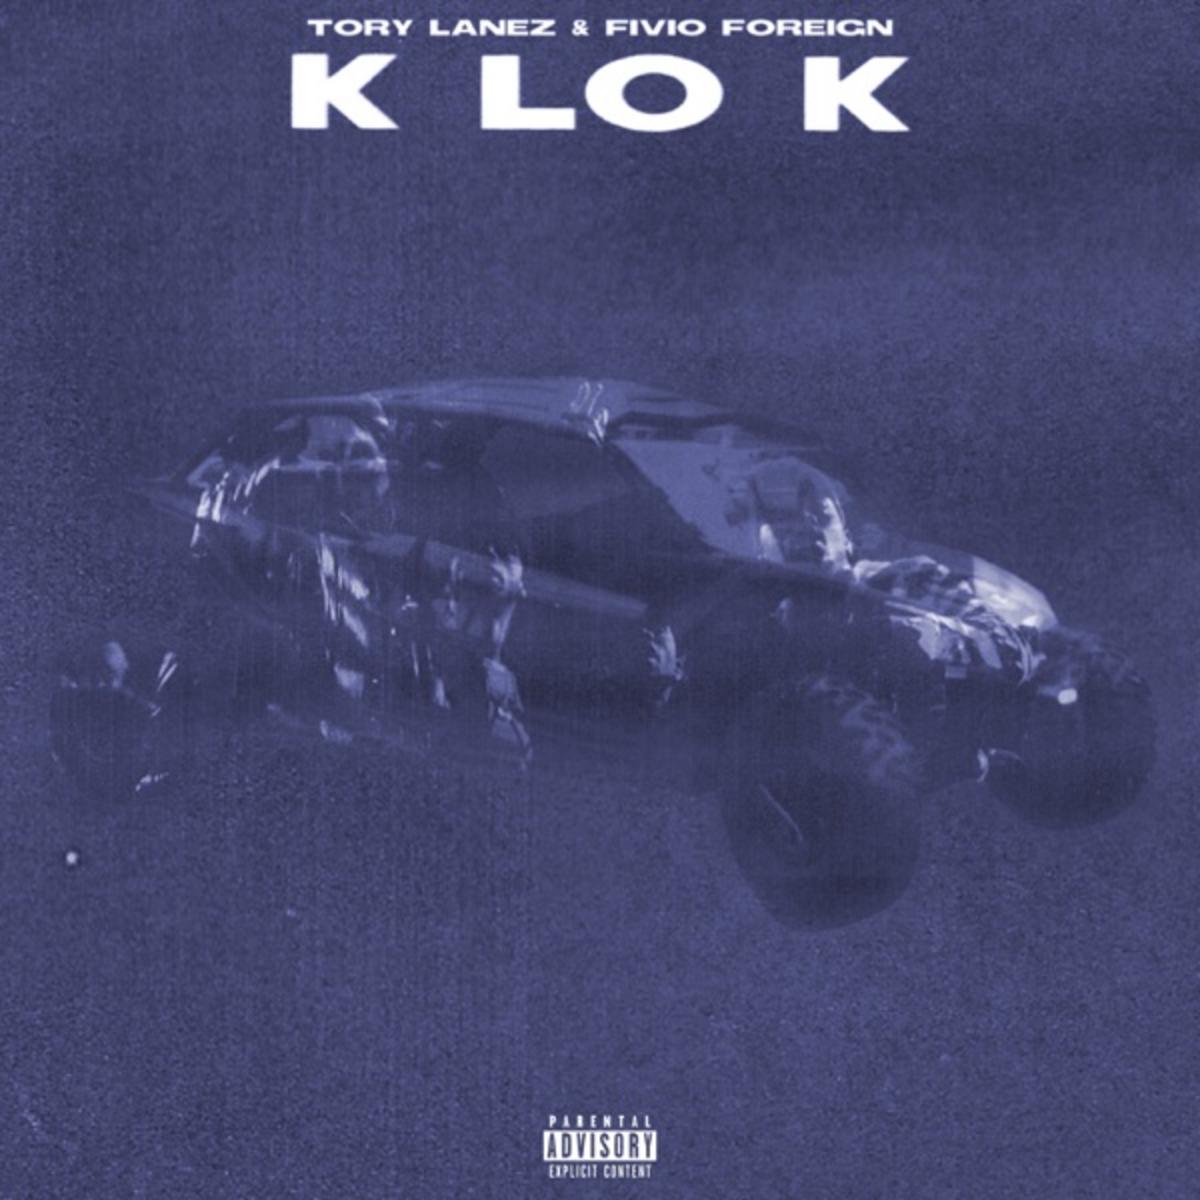 Tory Lanez Feat. Fivio Foreign – “K Lo K” [Audio]